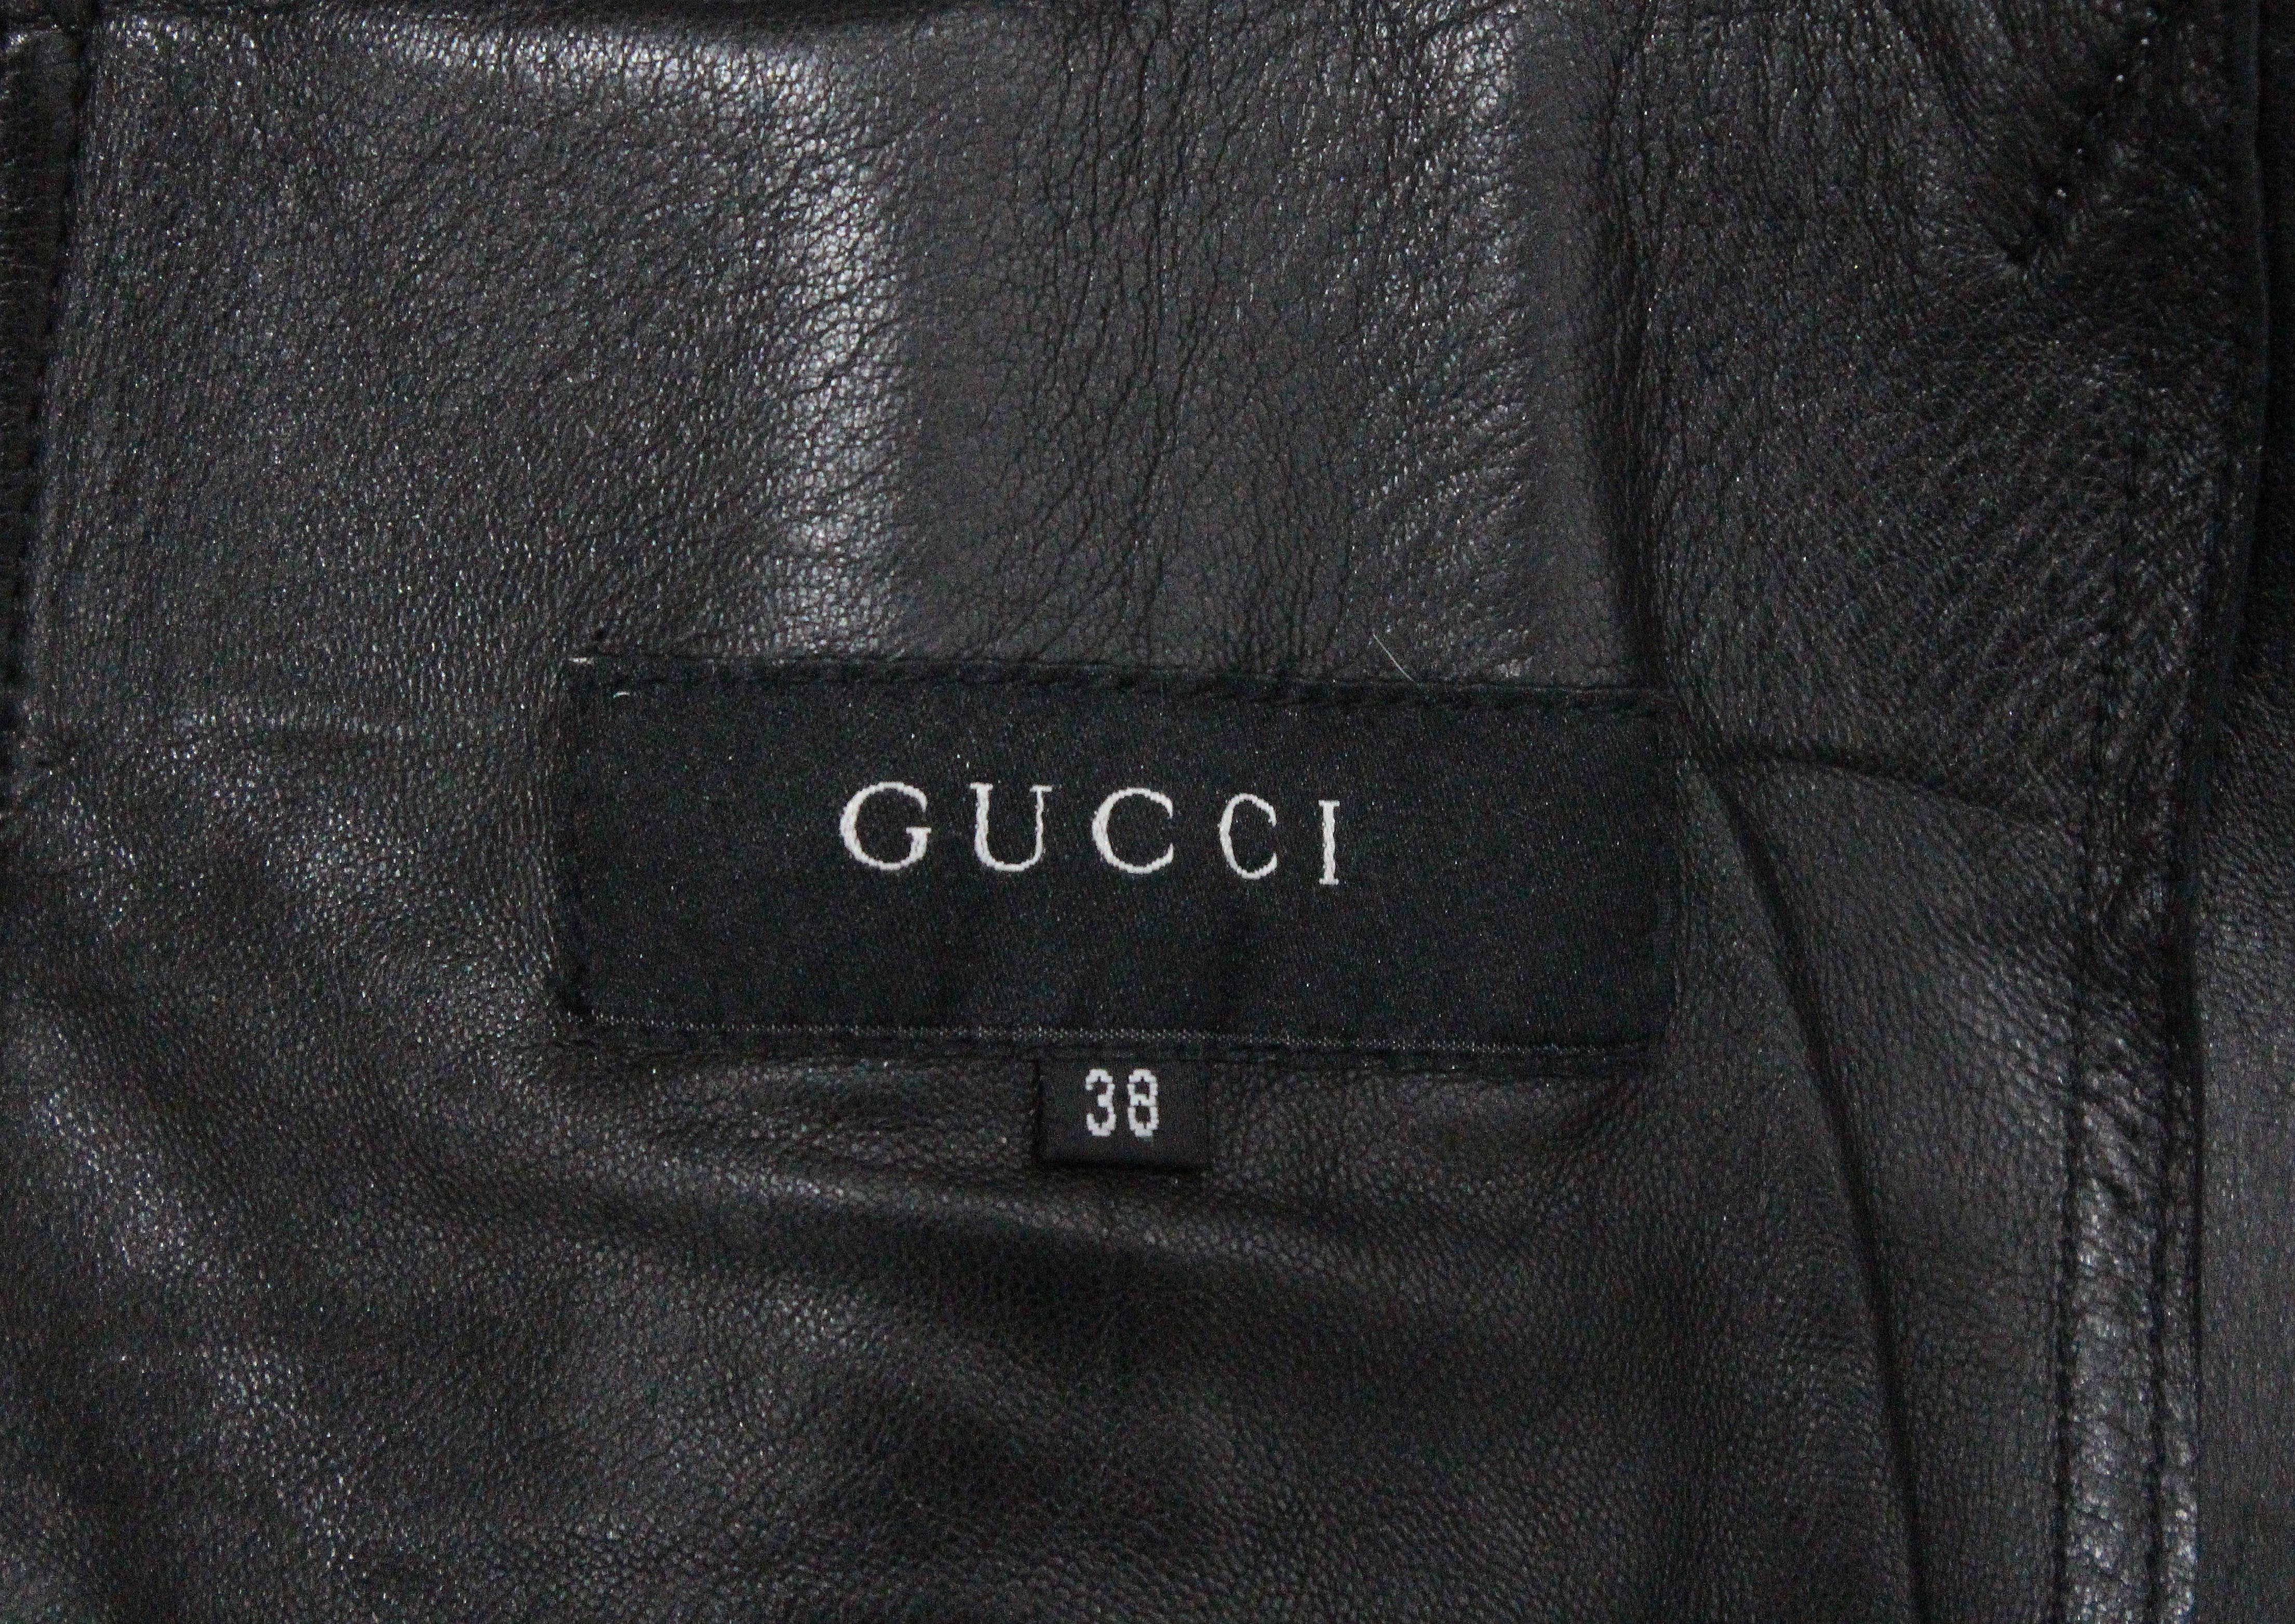 Gucci by Tom Ford goat hair blazer jacket, c. 1999 3